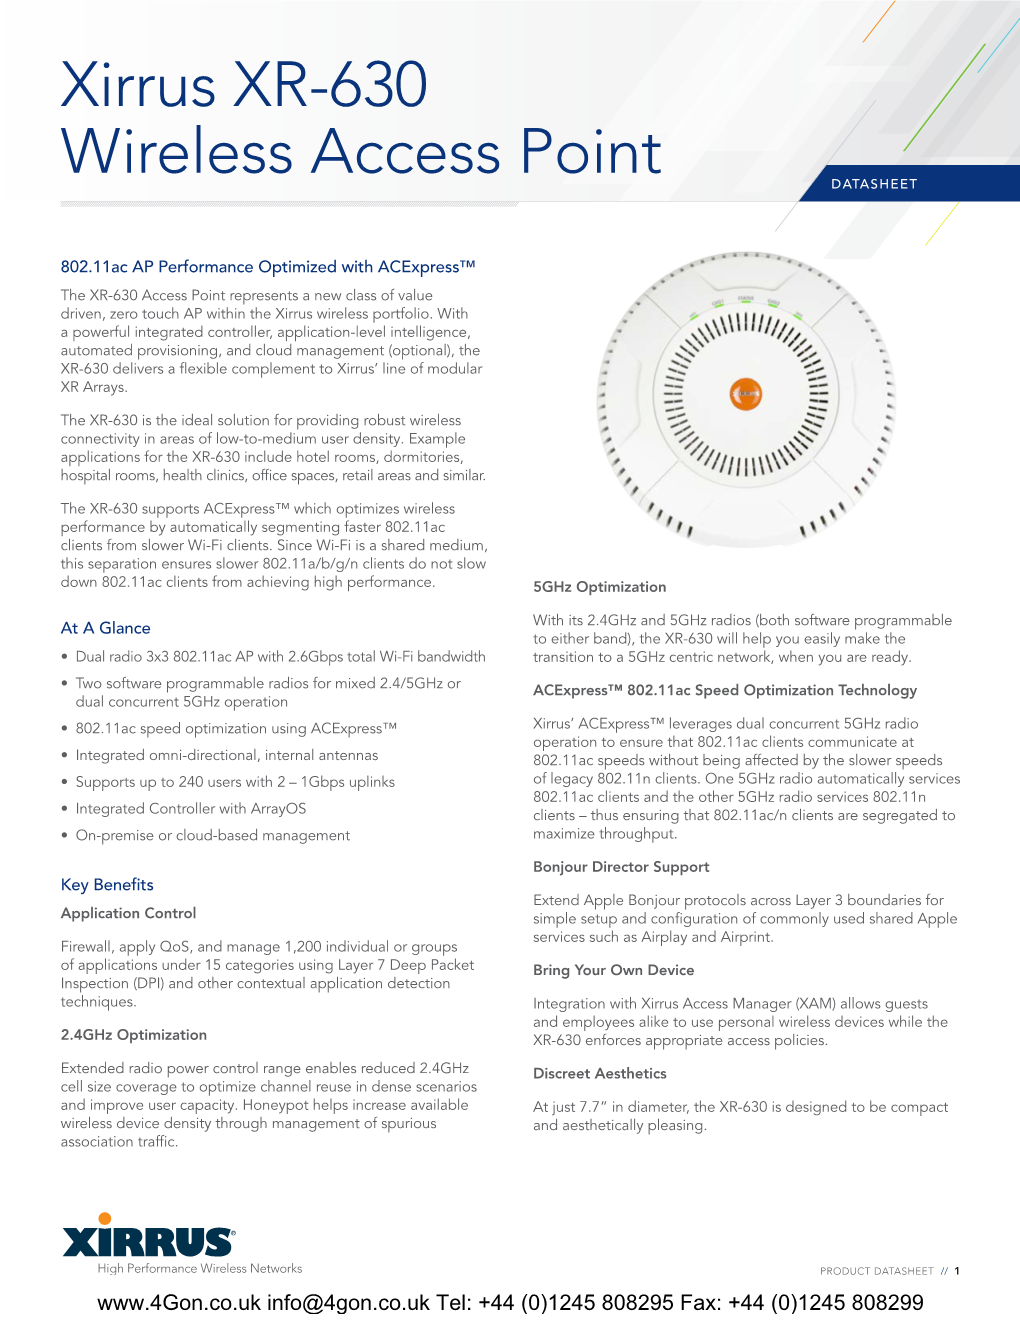 Xirrus XR-630 Wireless Access Point DATASHEET